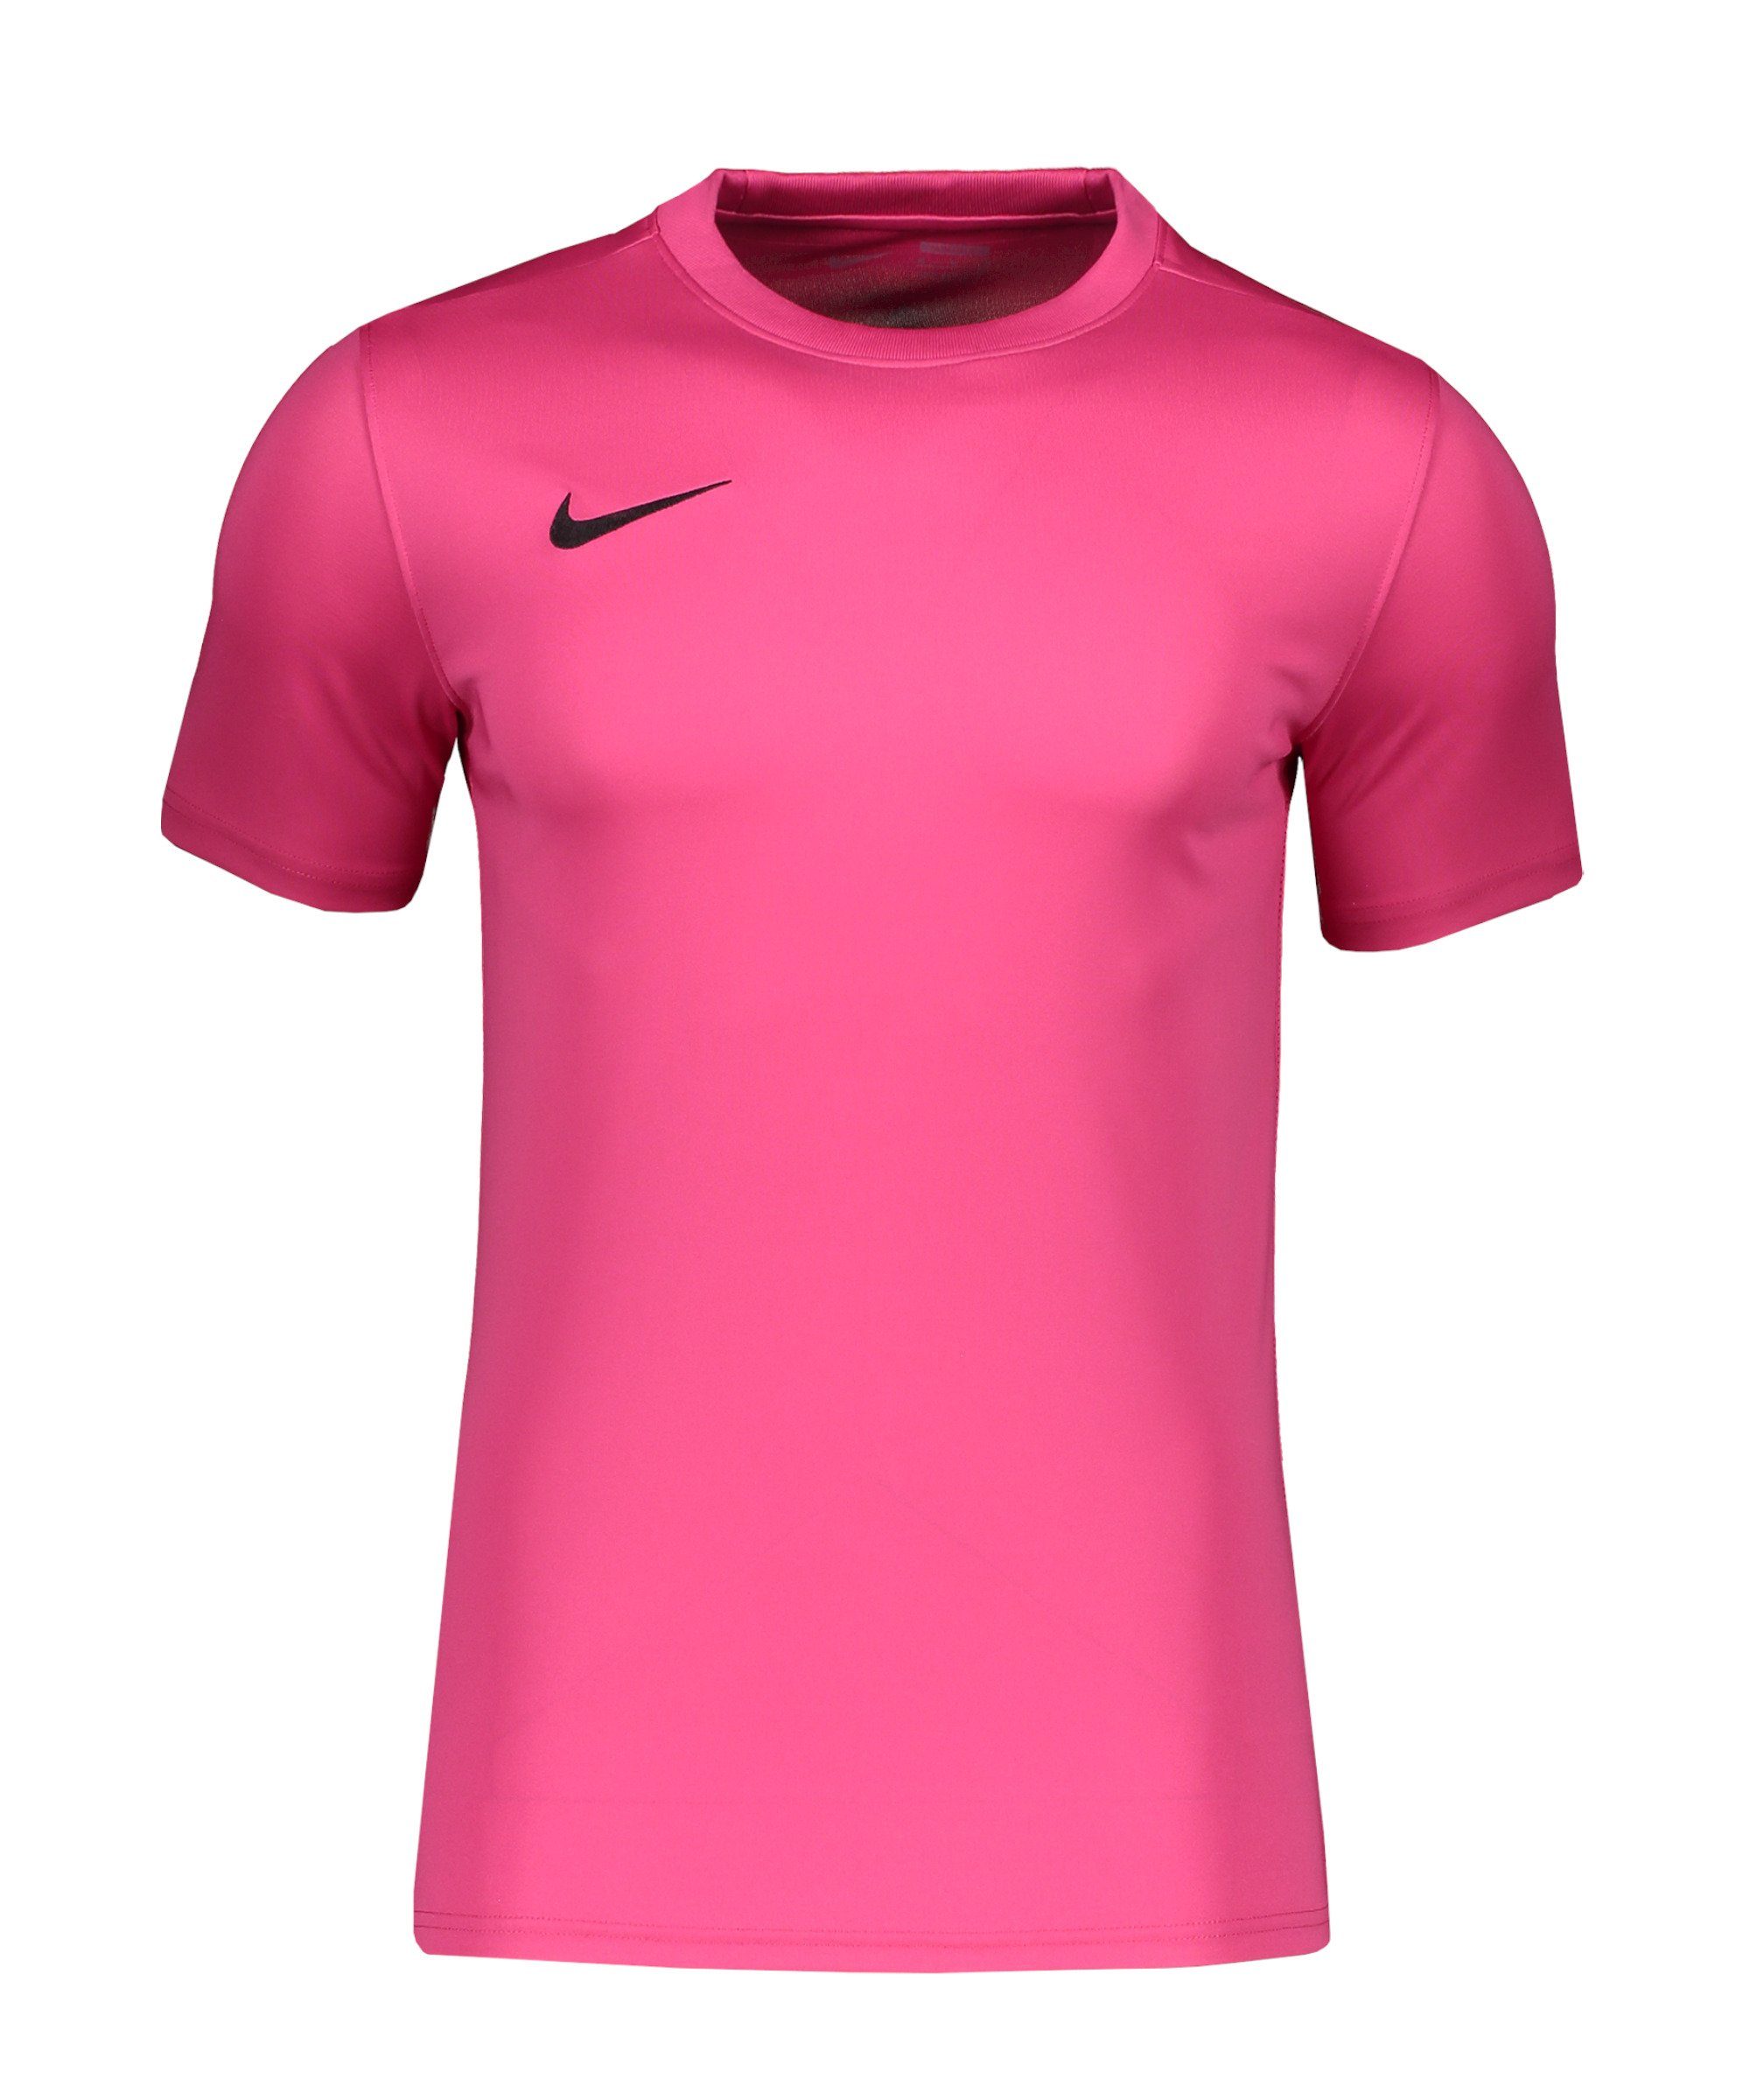 Nike Fußballtrikot Park VII Trikot kurzarm pinkschwarz